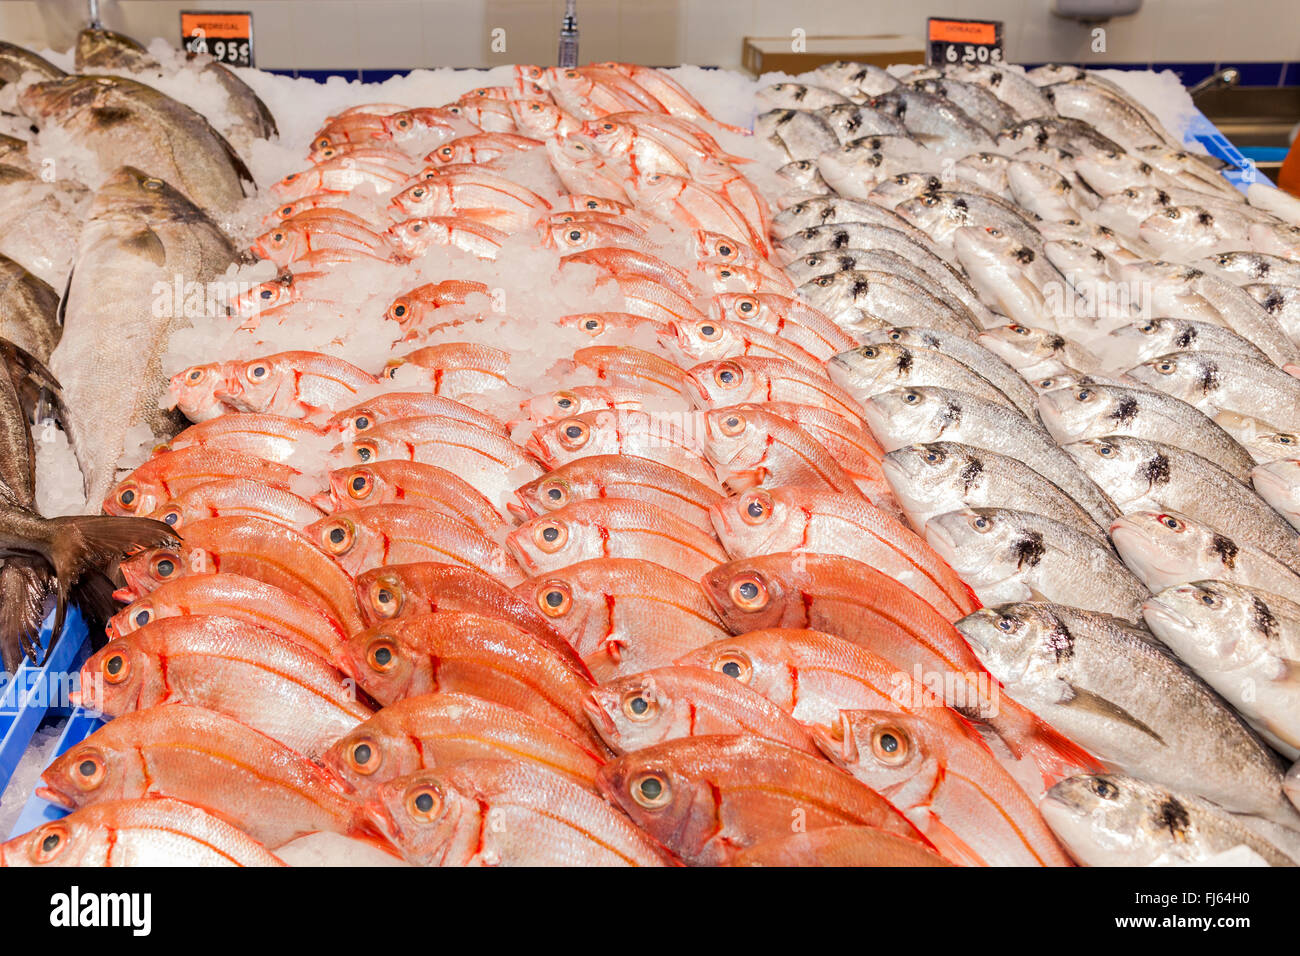 Pescado de supermercado fotografías e imágenes de alta resolución - Alamy